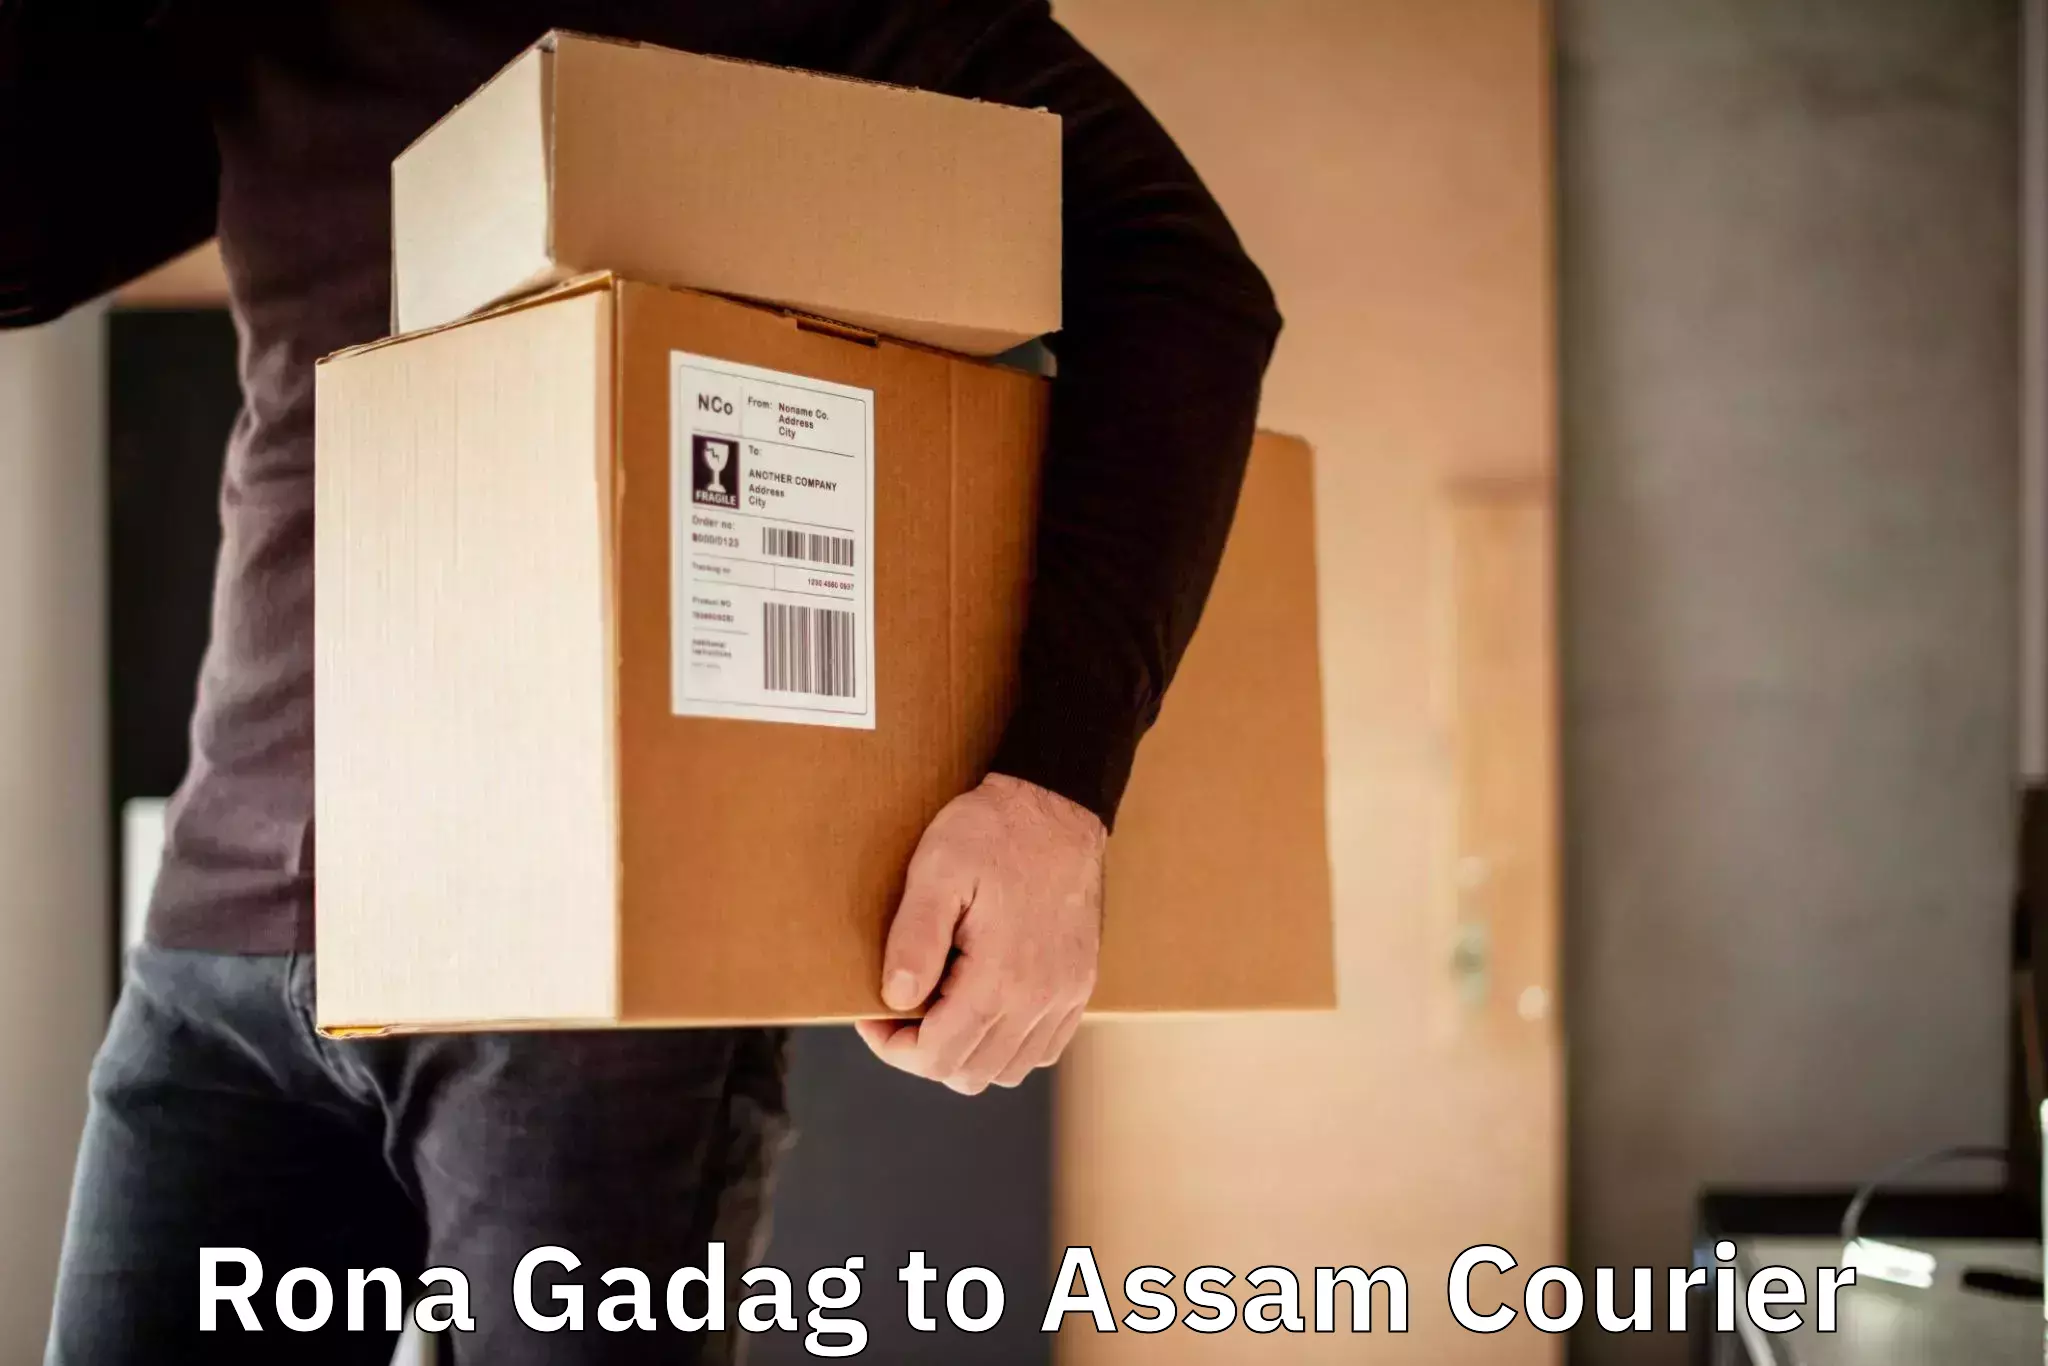 Professional courier handling Rona Gadag to Assam